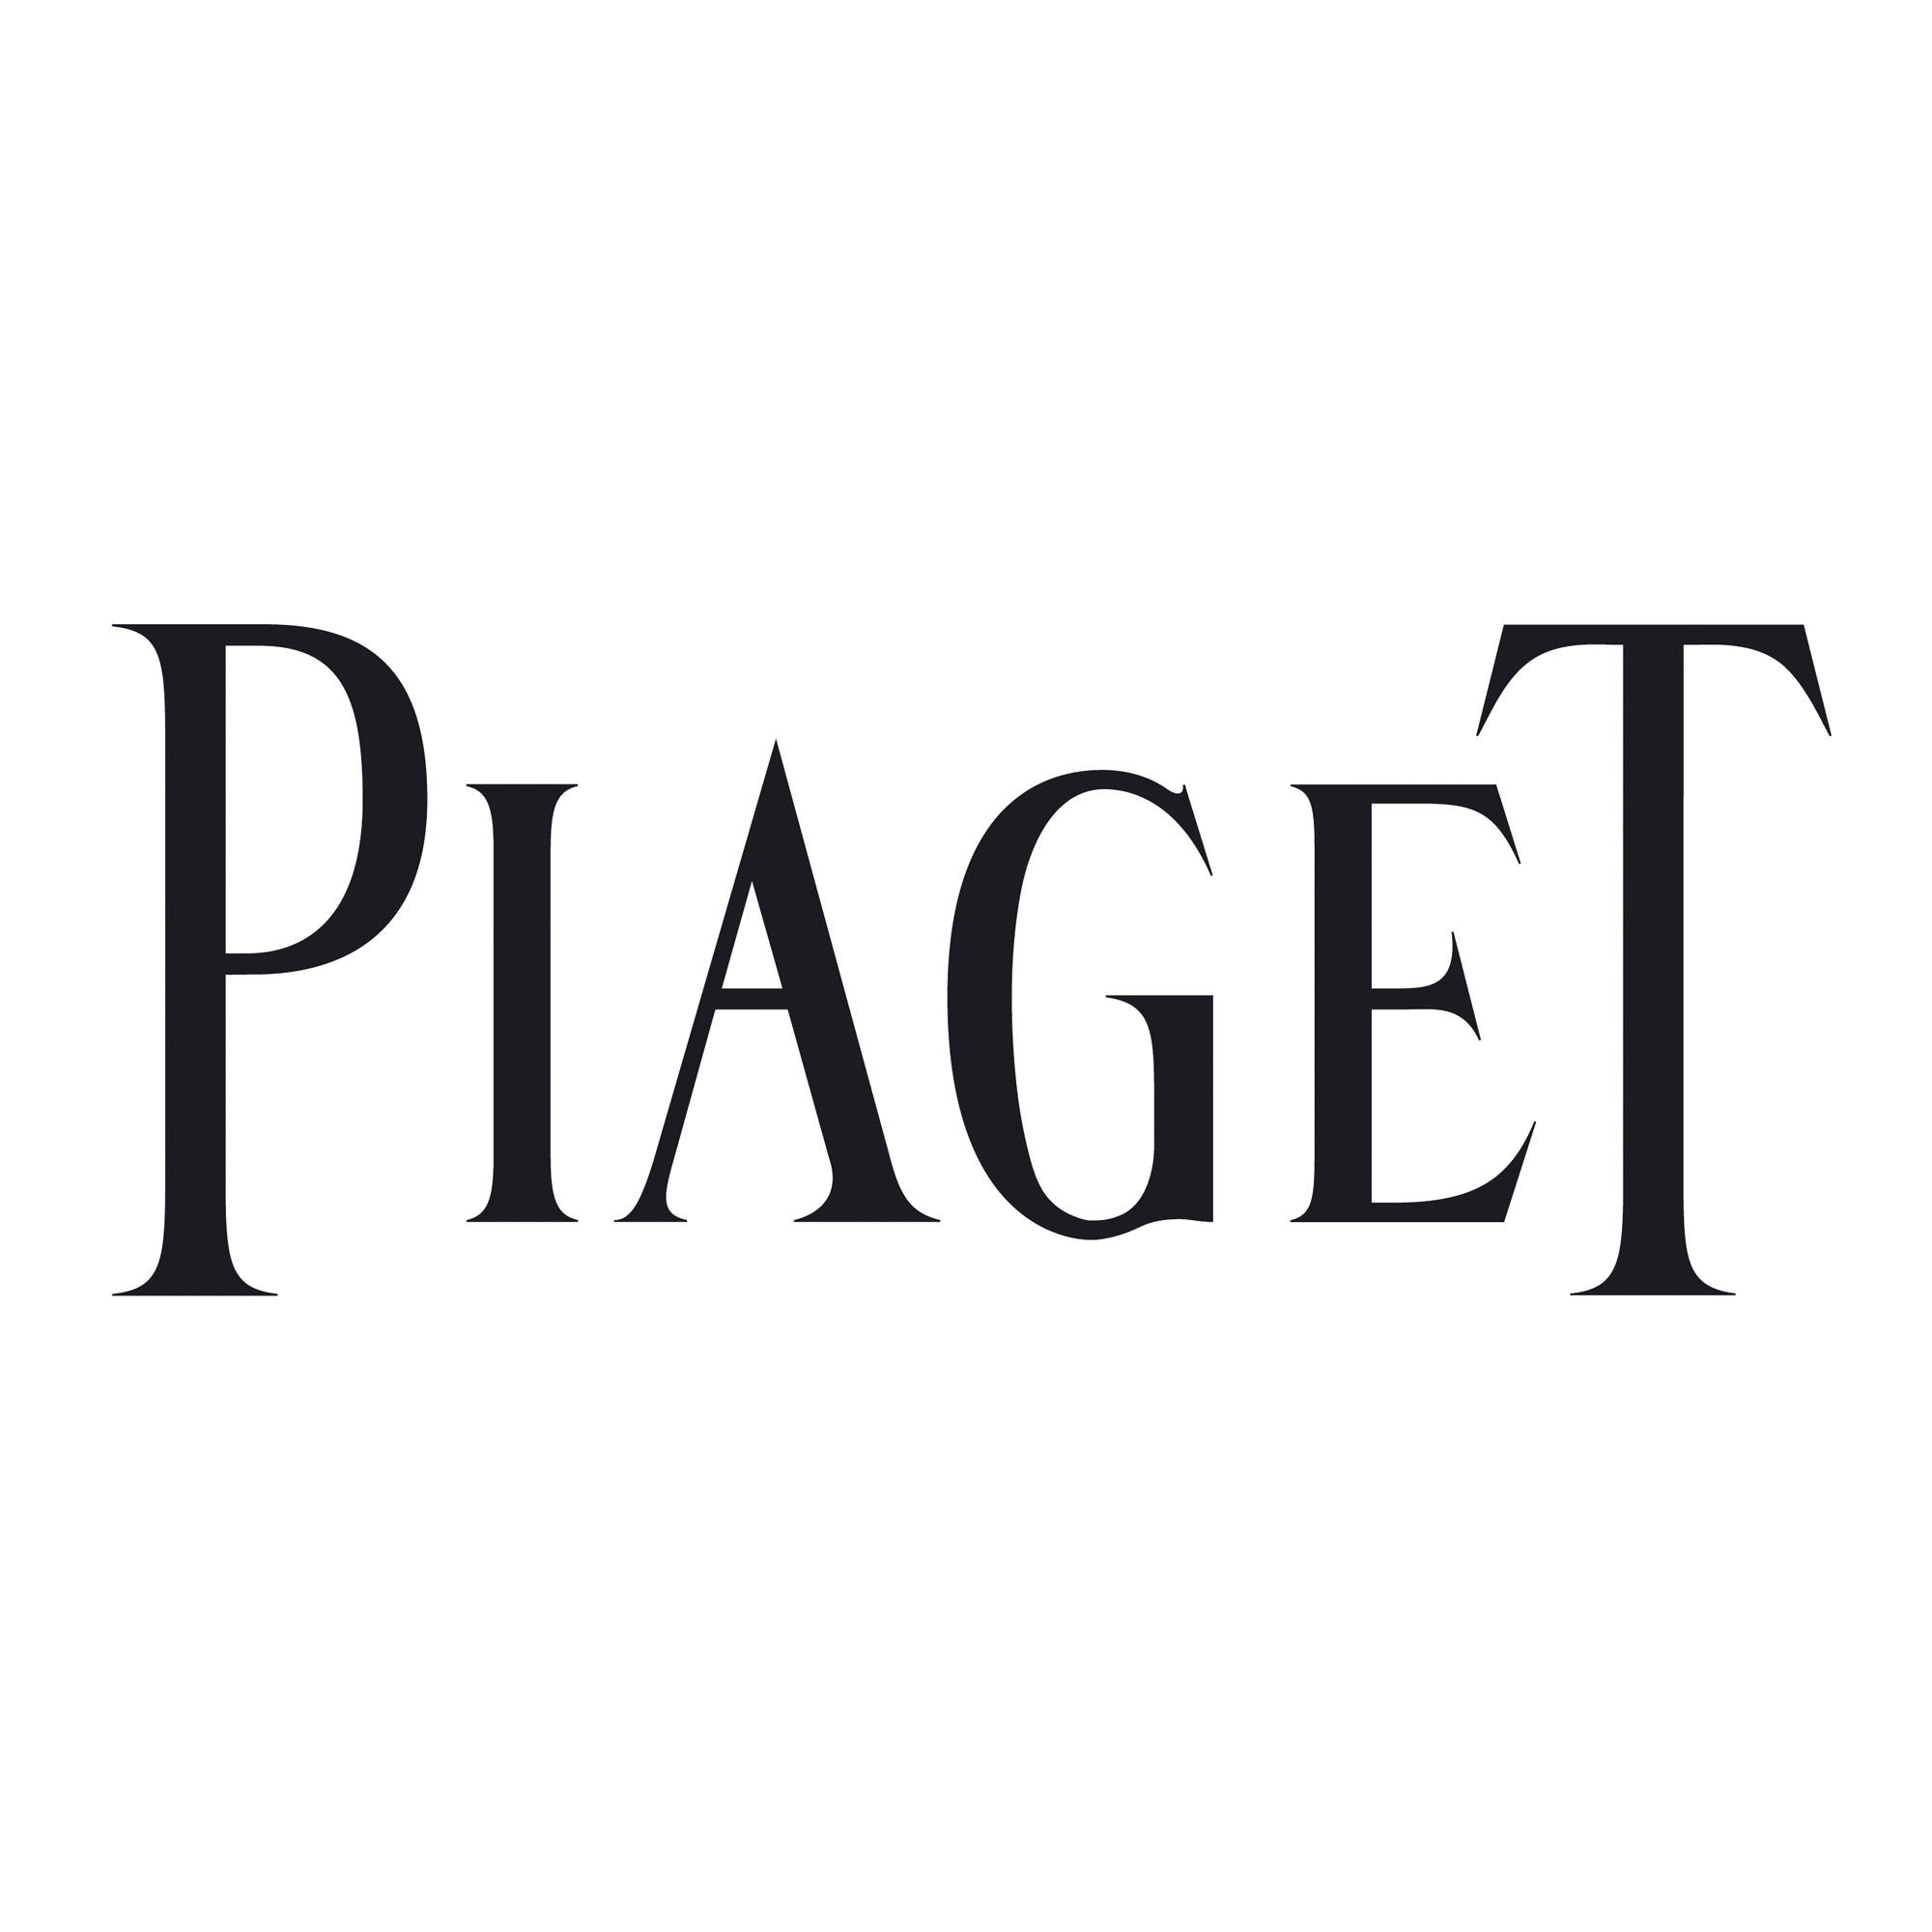 Piaget Boutique Melbourne - Chadstone - Chadstone, VIC 3148 - (03) 9040 4350 | ShowMeLocal.com